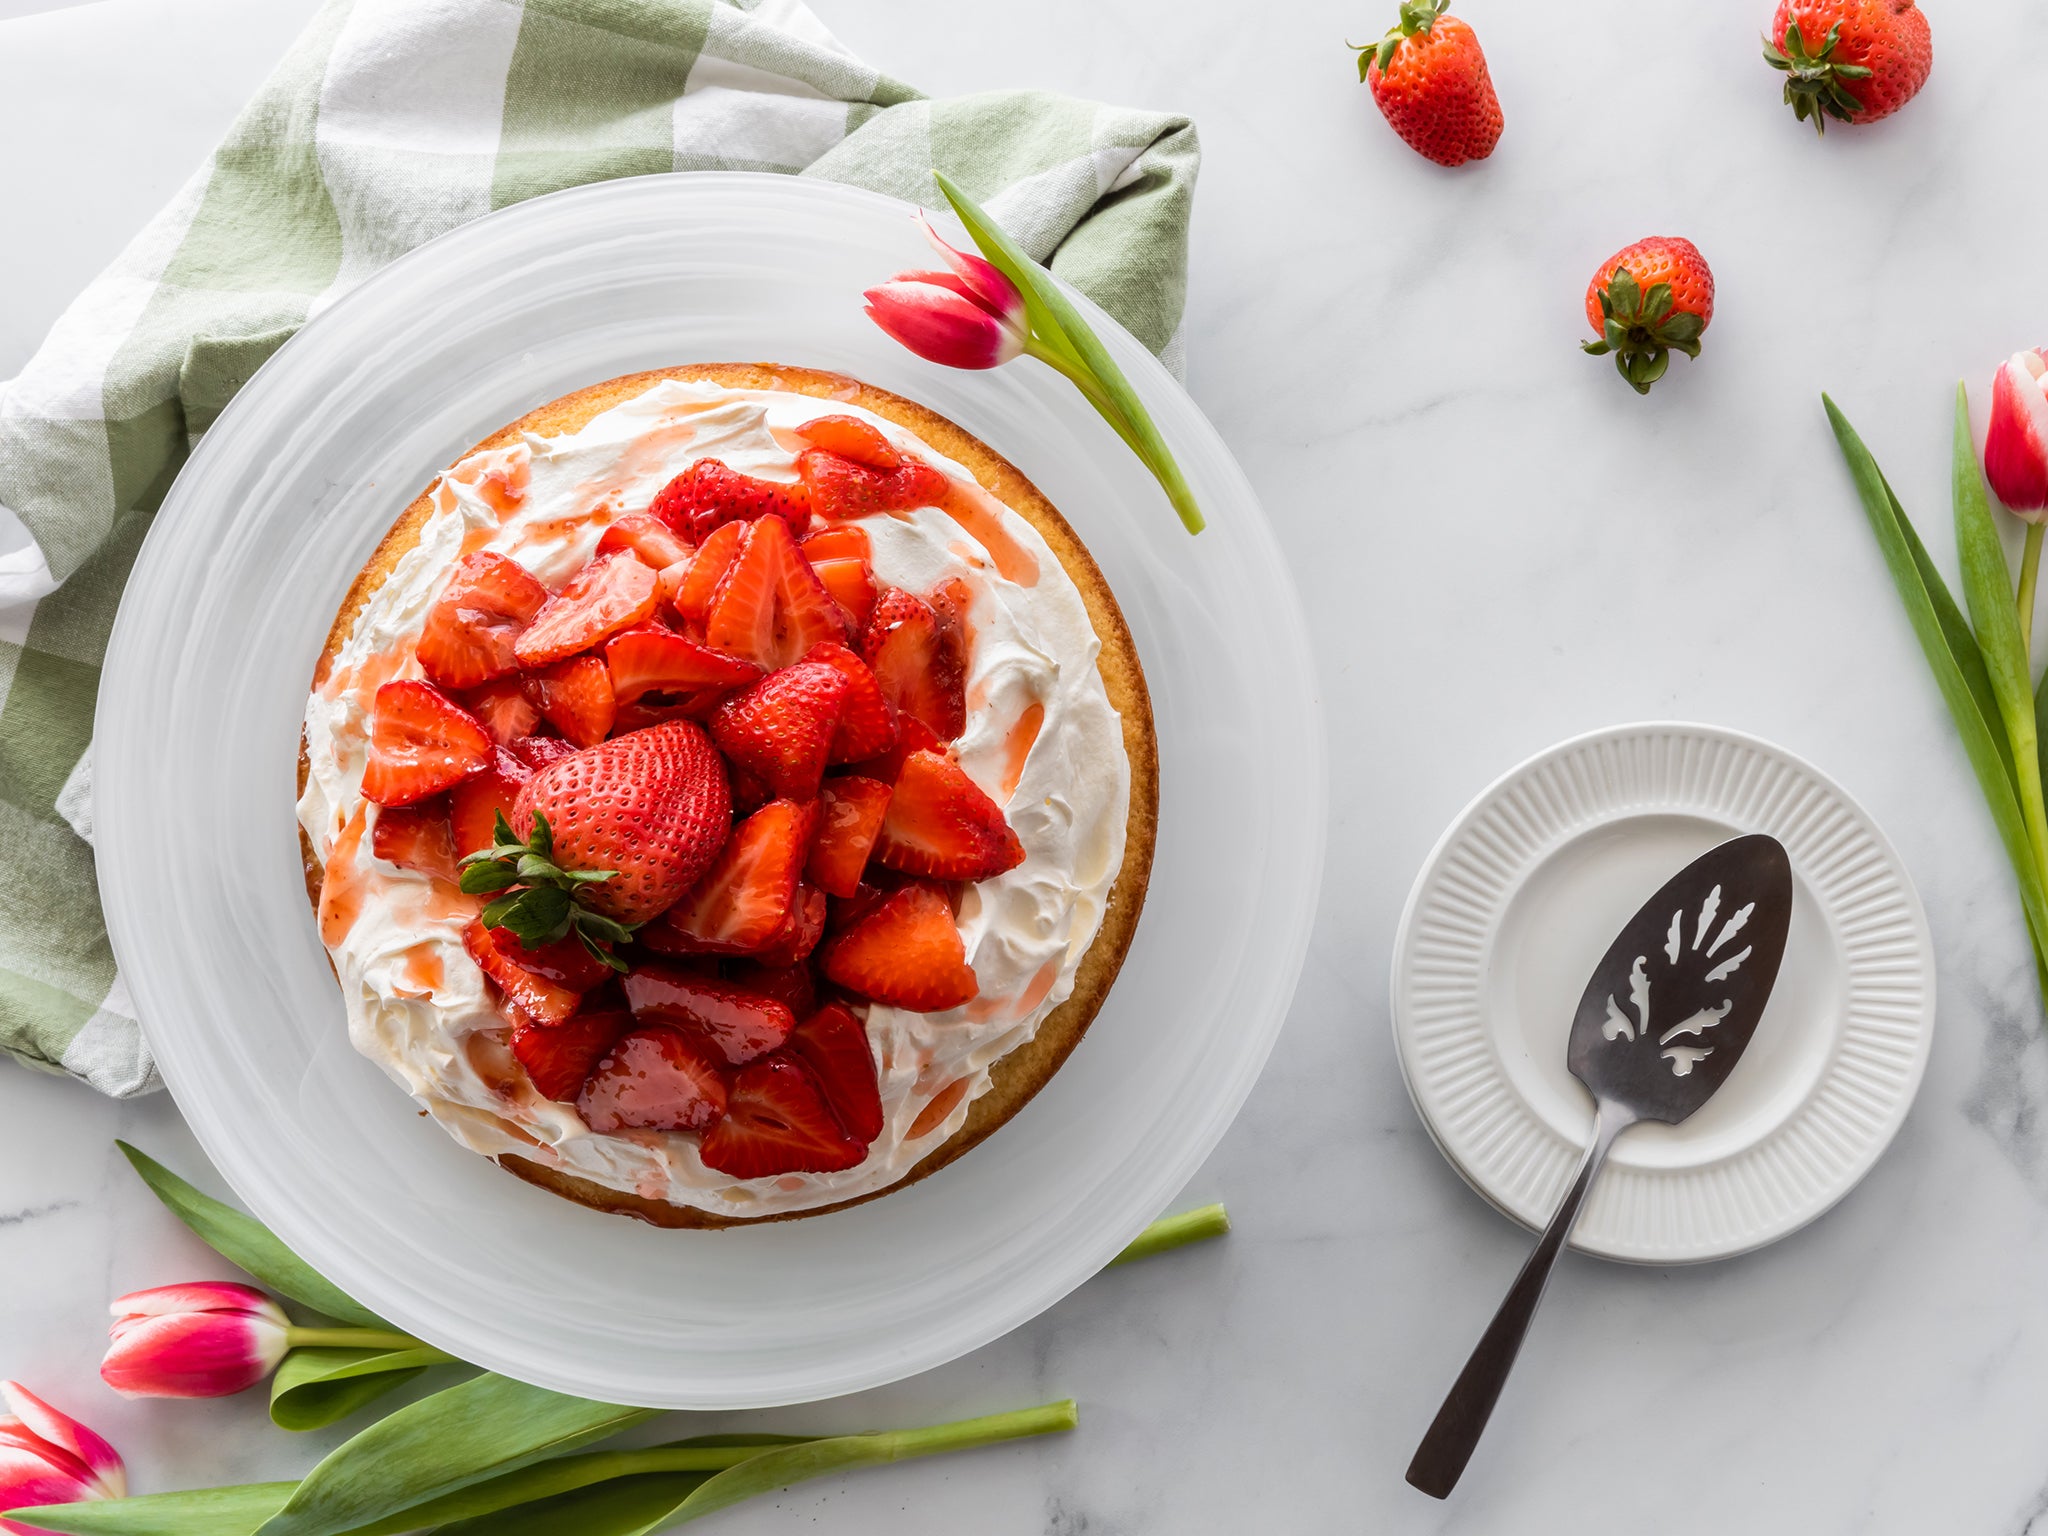 Strawberry shortcake is a sure-fire win